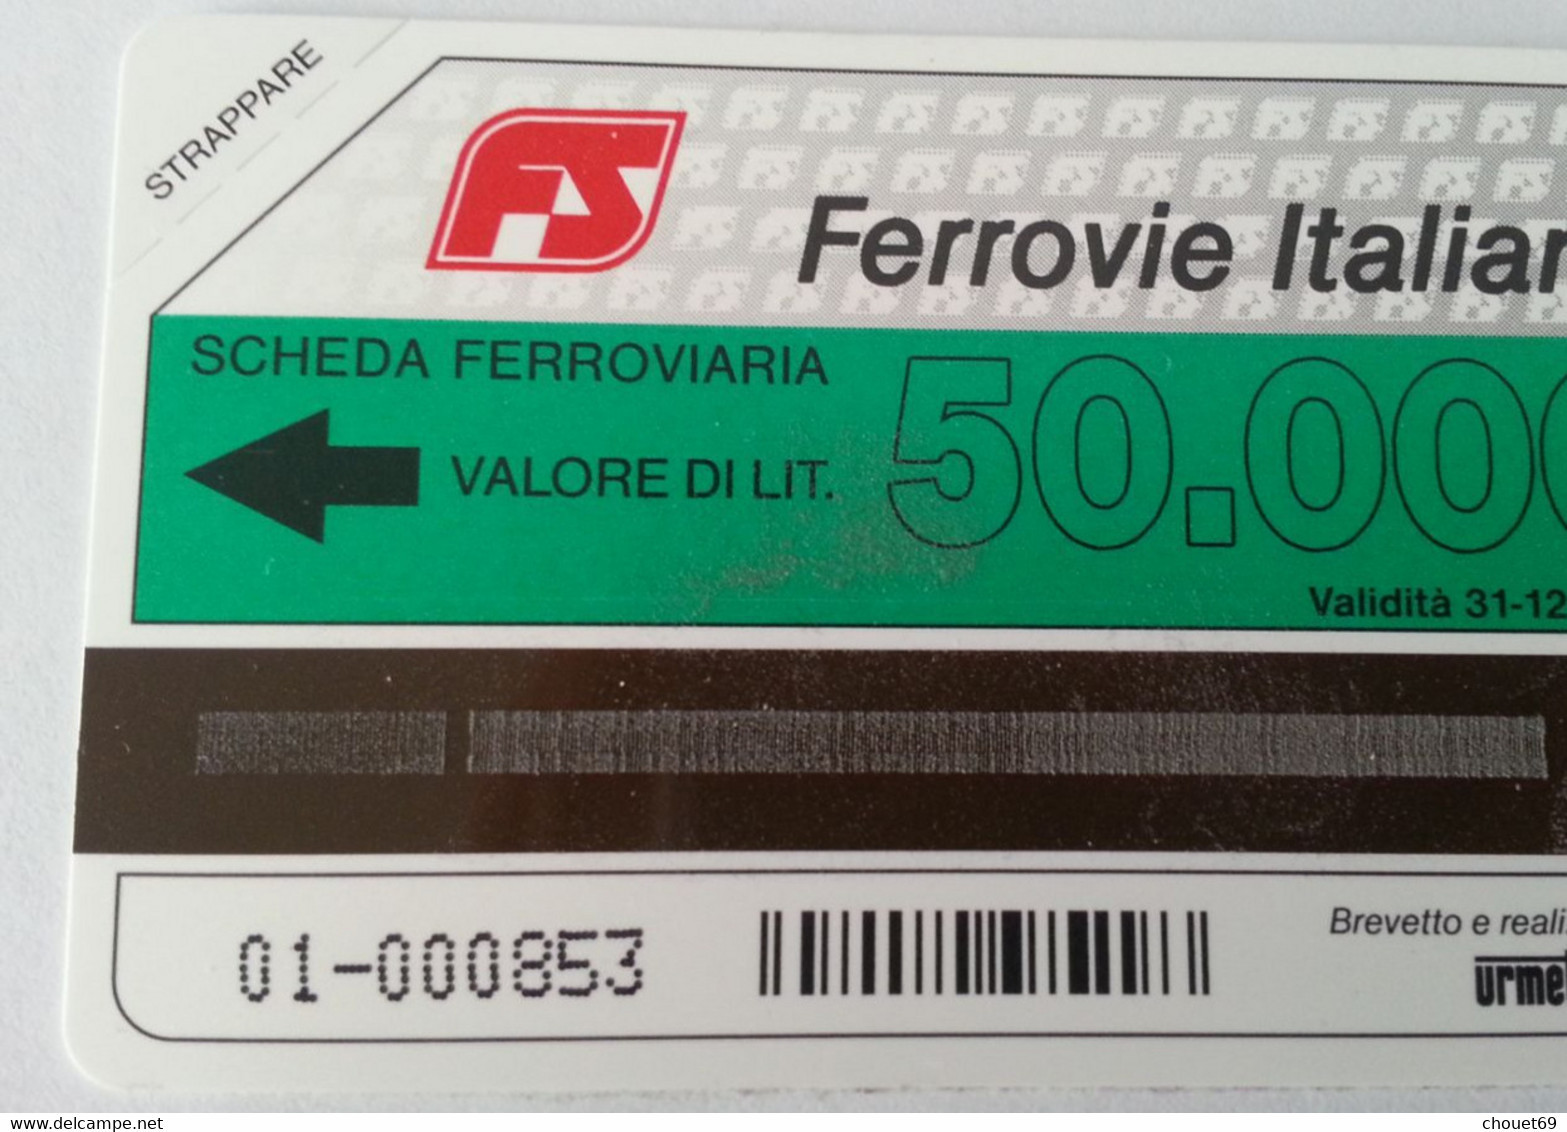 FS Ferrovie Italiane Scheda Ferroviaria In Train 50000 Urmet NEUVE MINT Ferrovie (D0415 - Usages Spéciaux